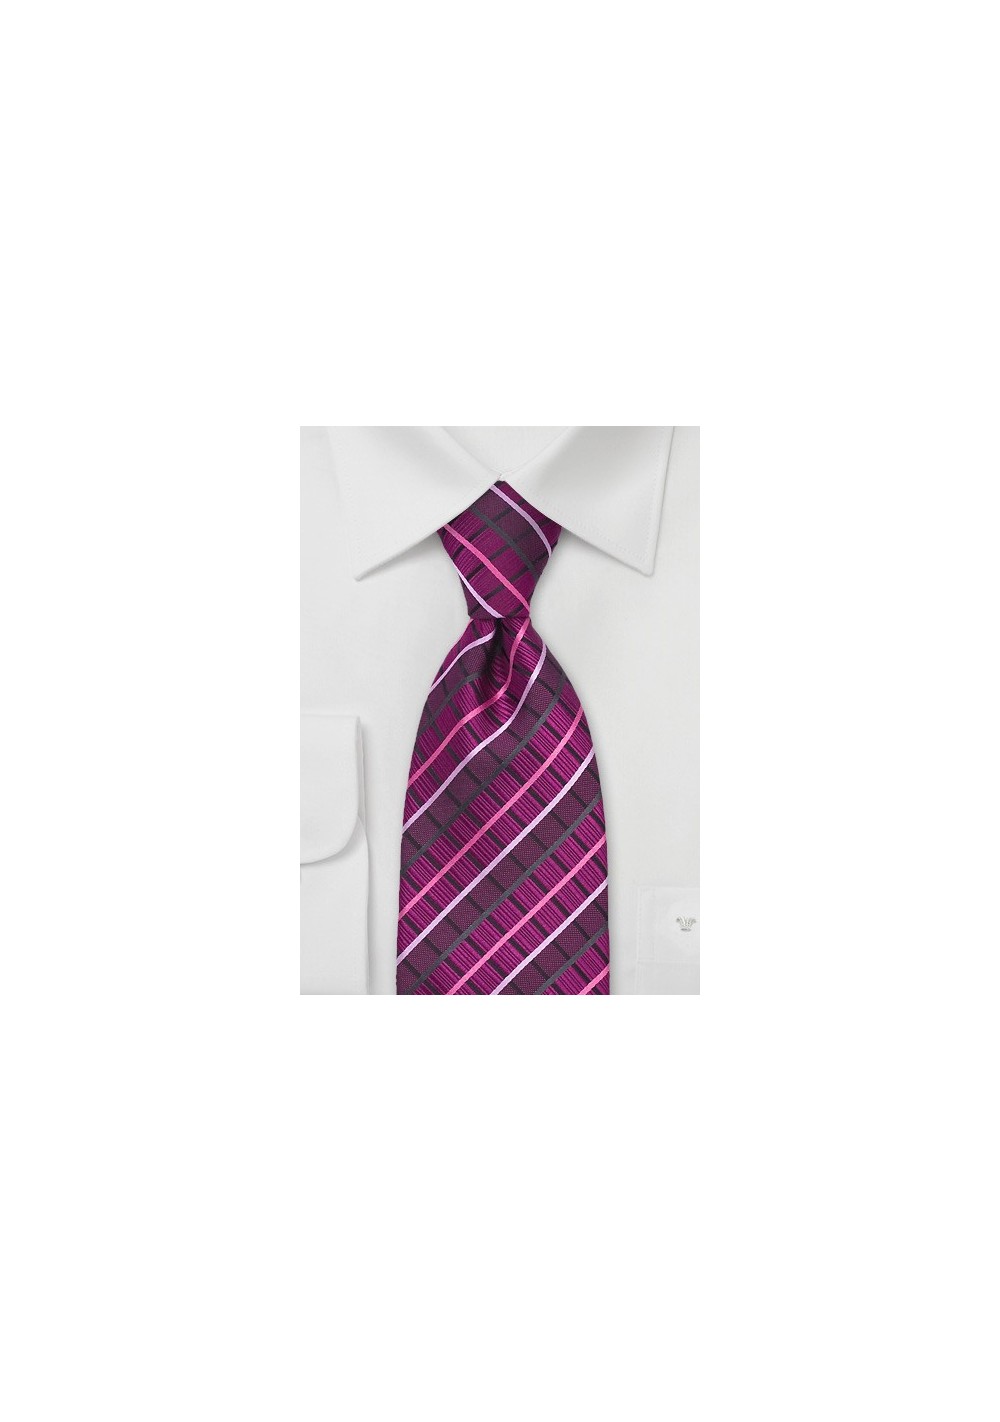 Hot Pink Checkered Tie